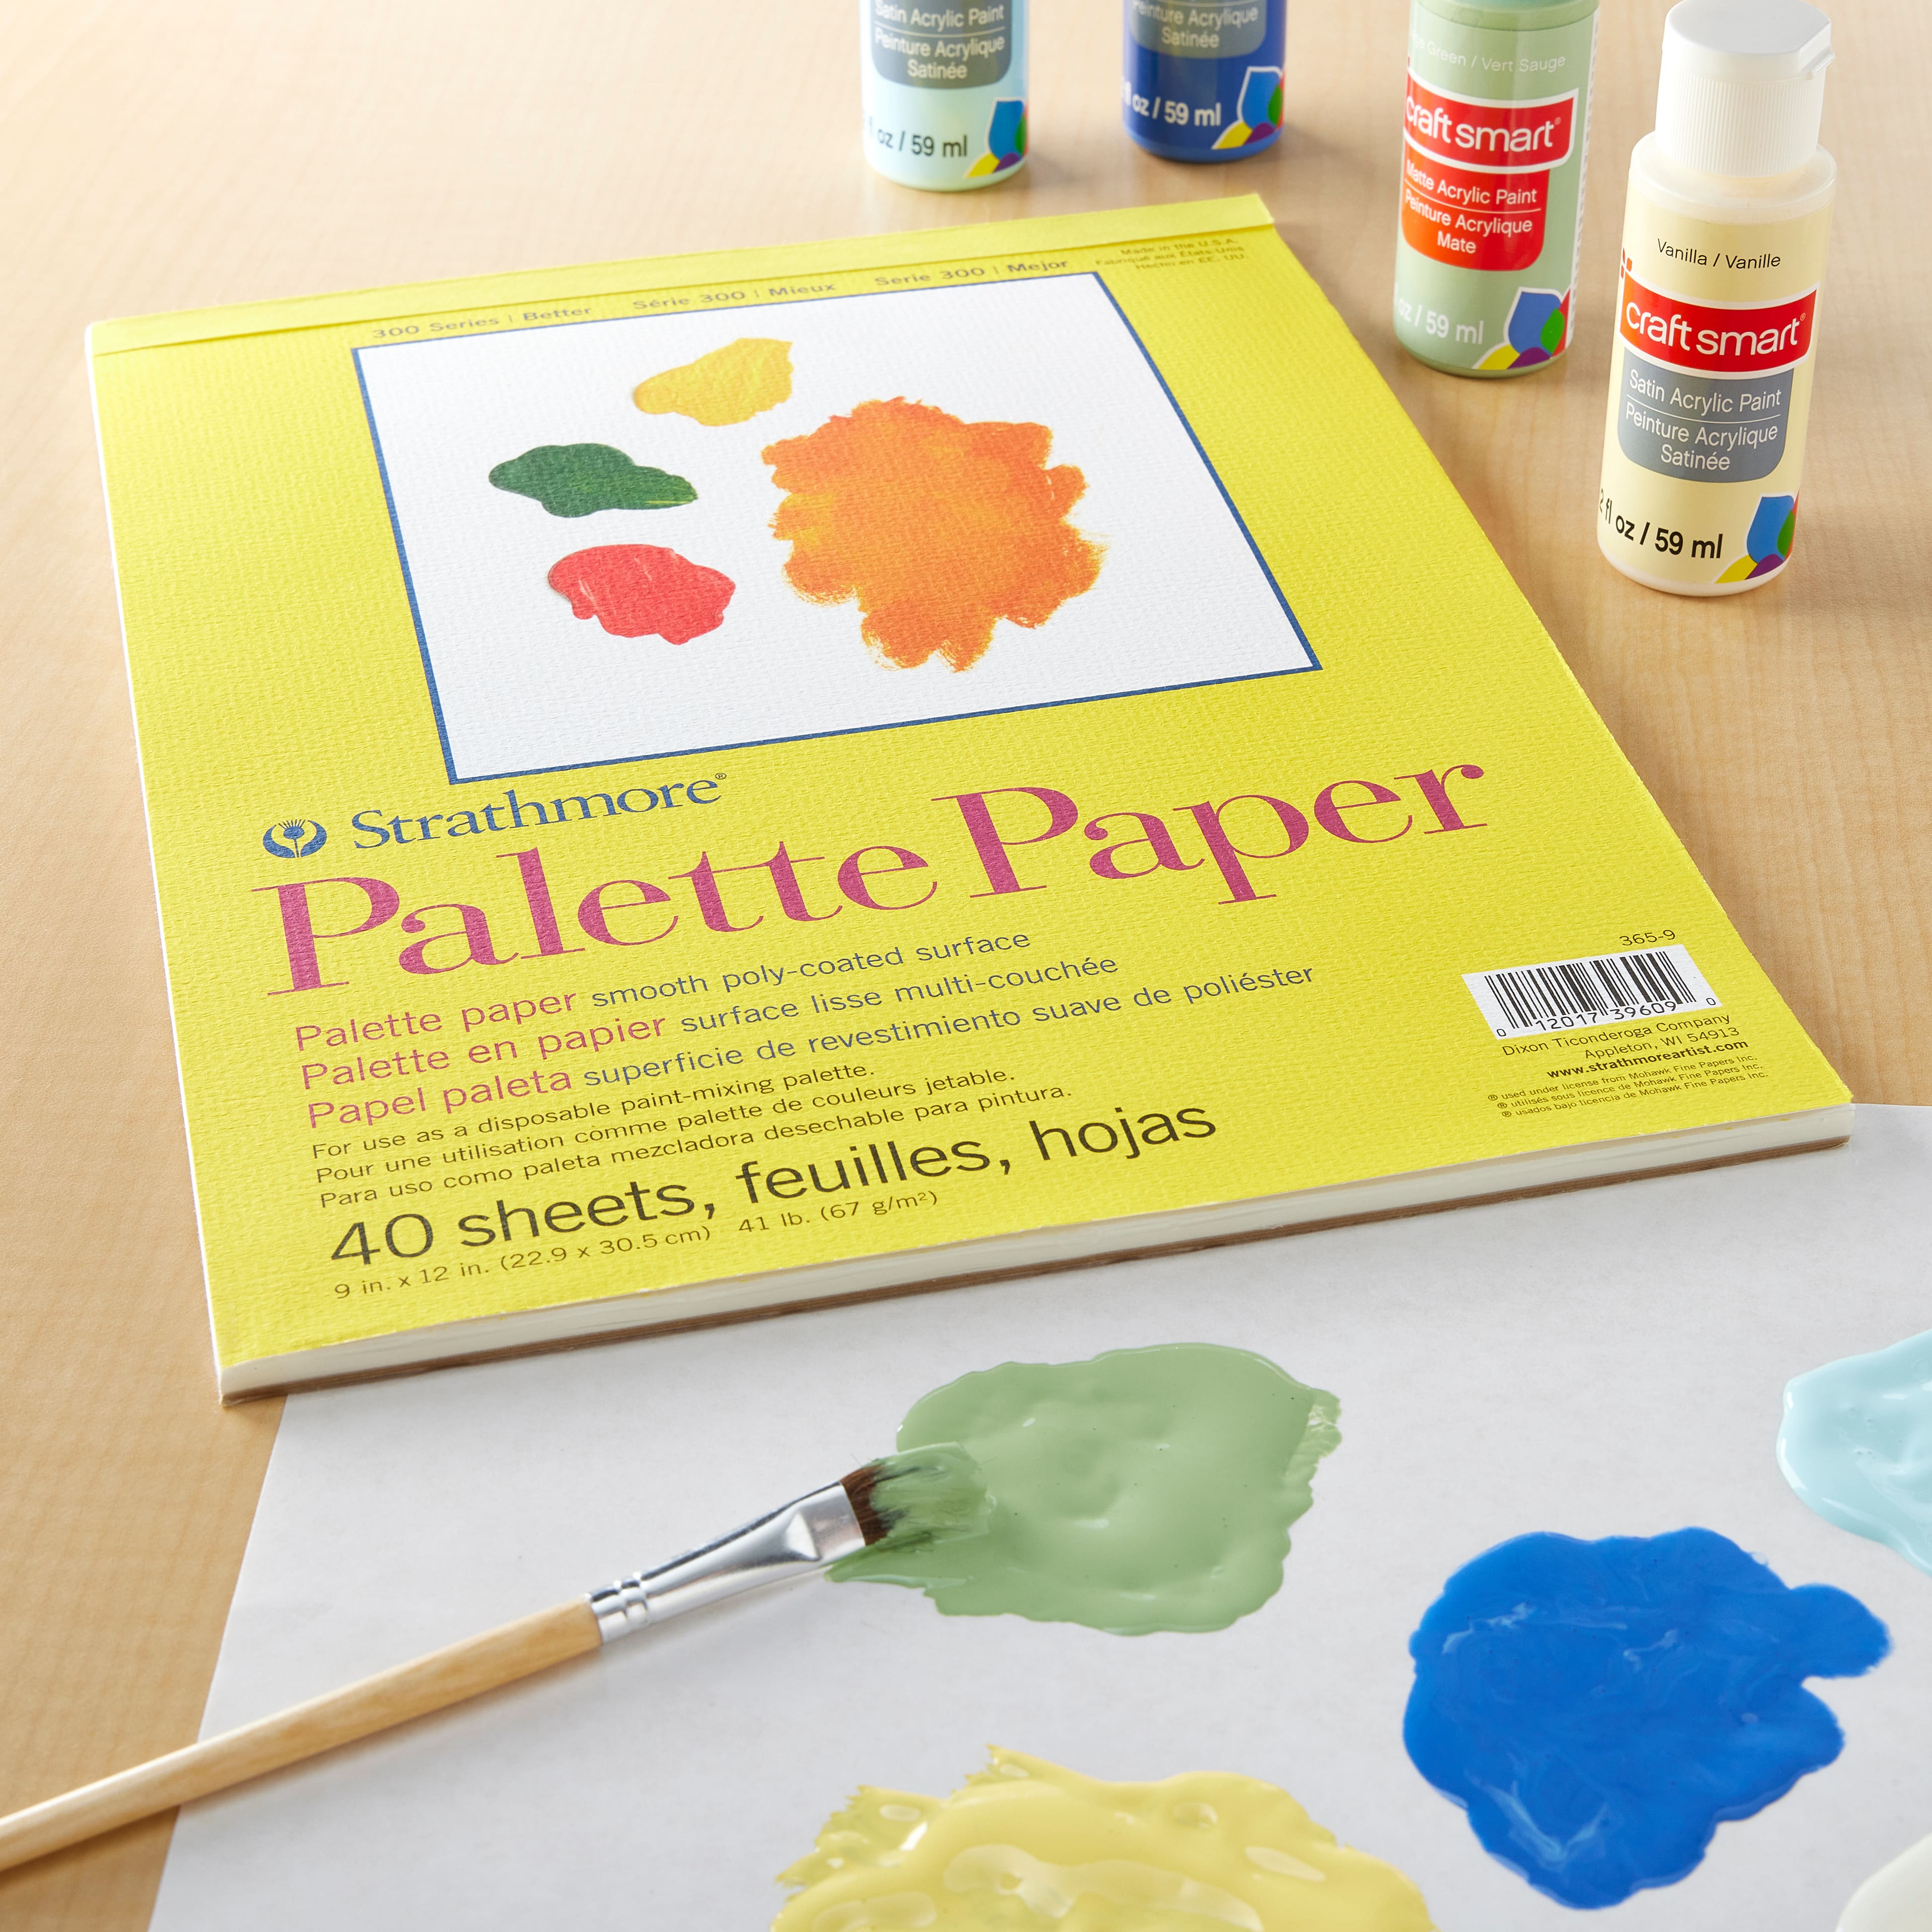 Strathmore Palette Paper Pads